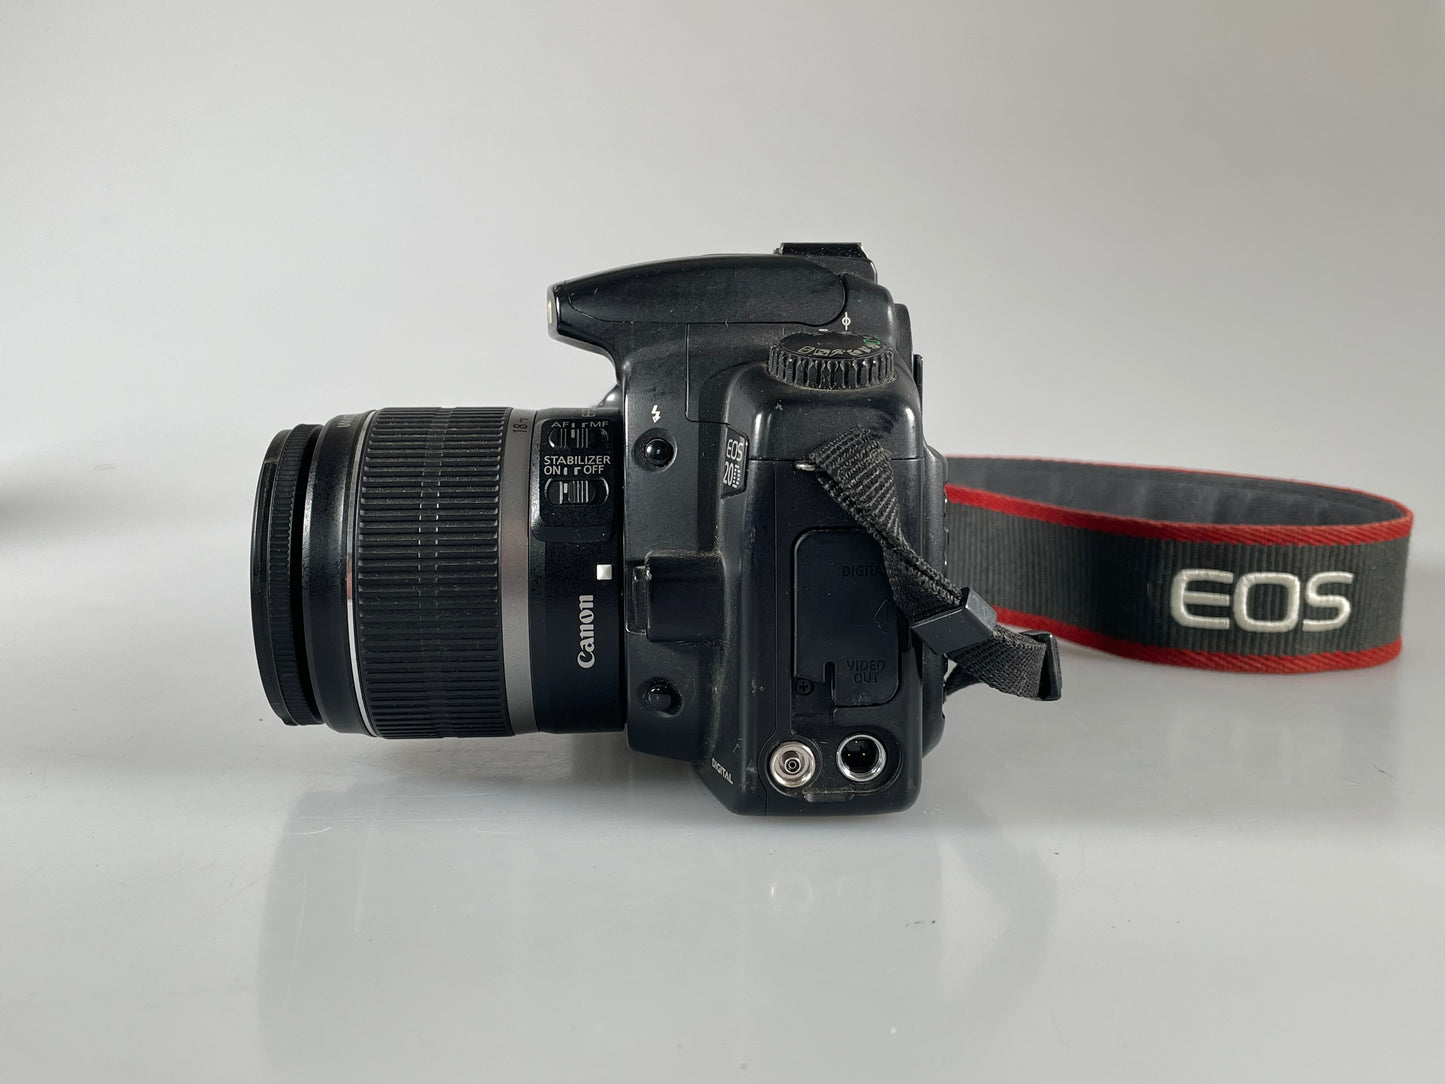 Canon 20D Digital SLR Camera Body with 18-55mm lens kit